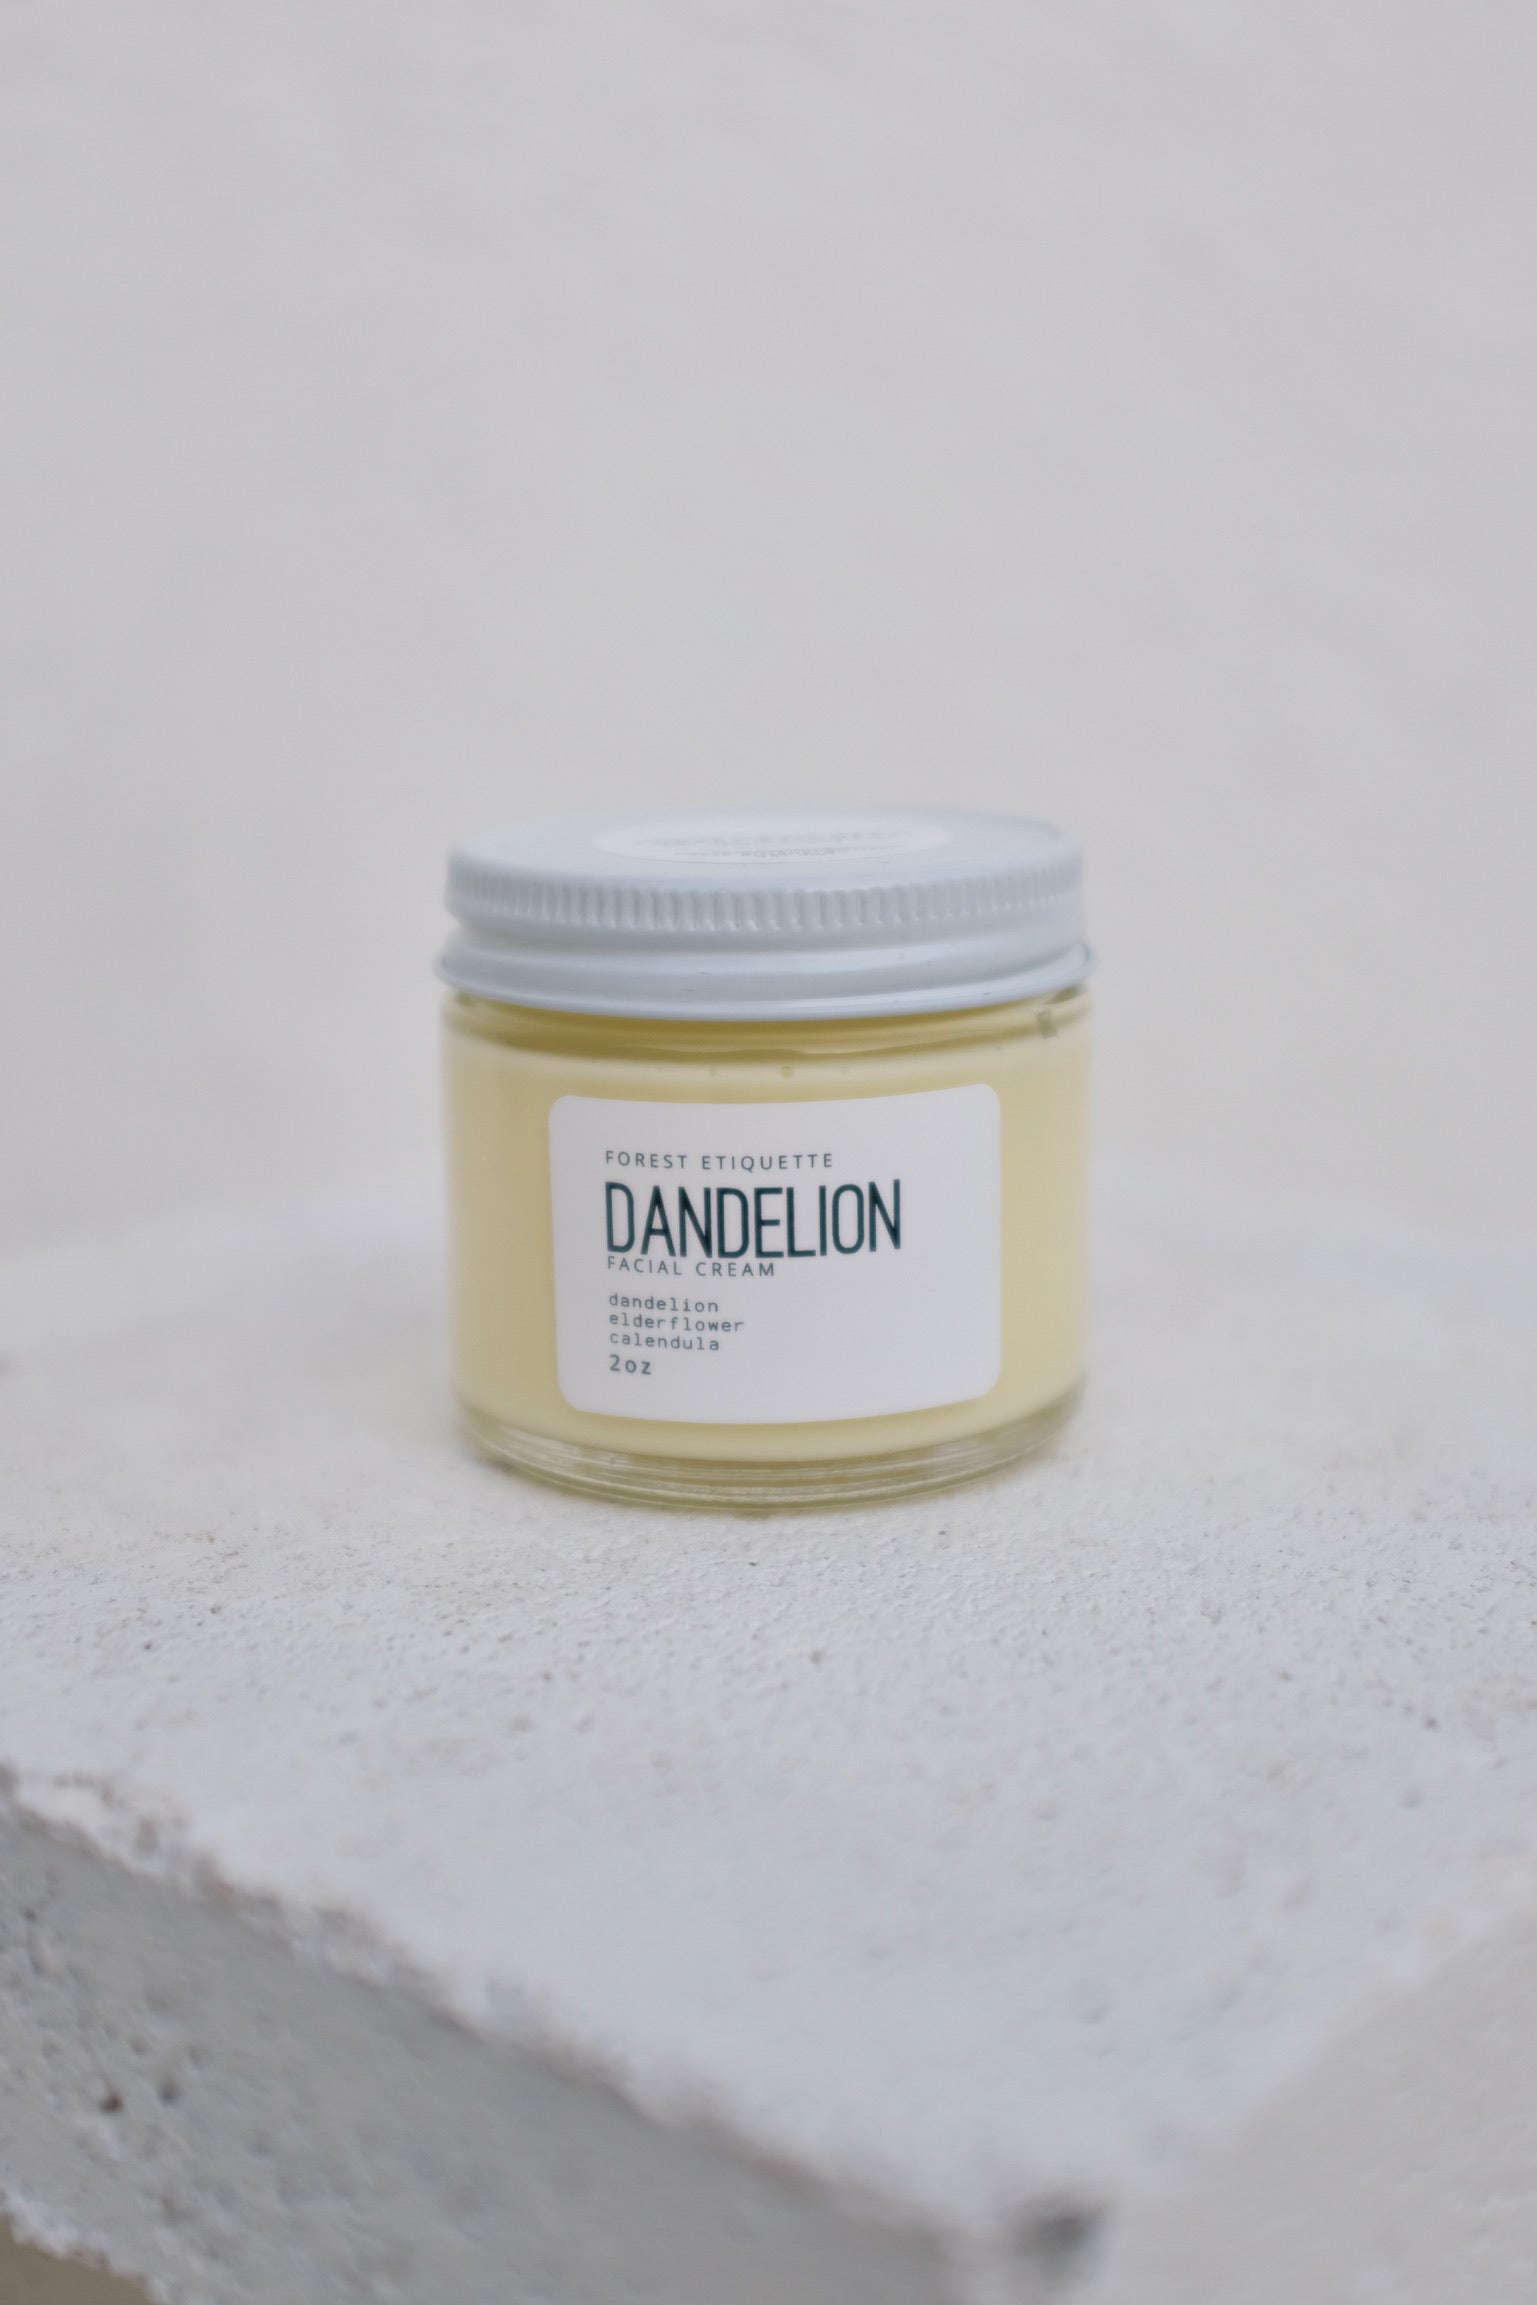 Forest Etiquette Dandelion Facial Cream